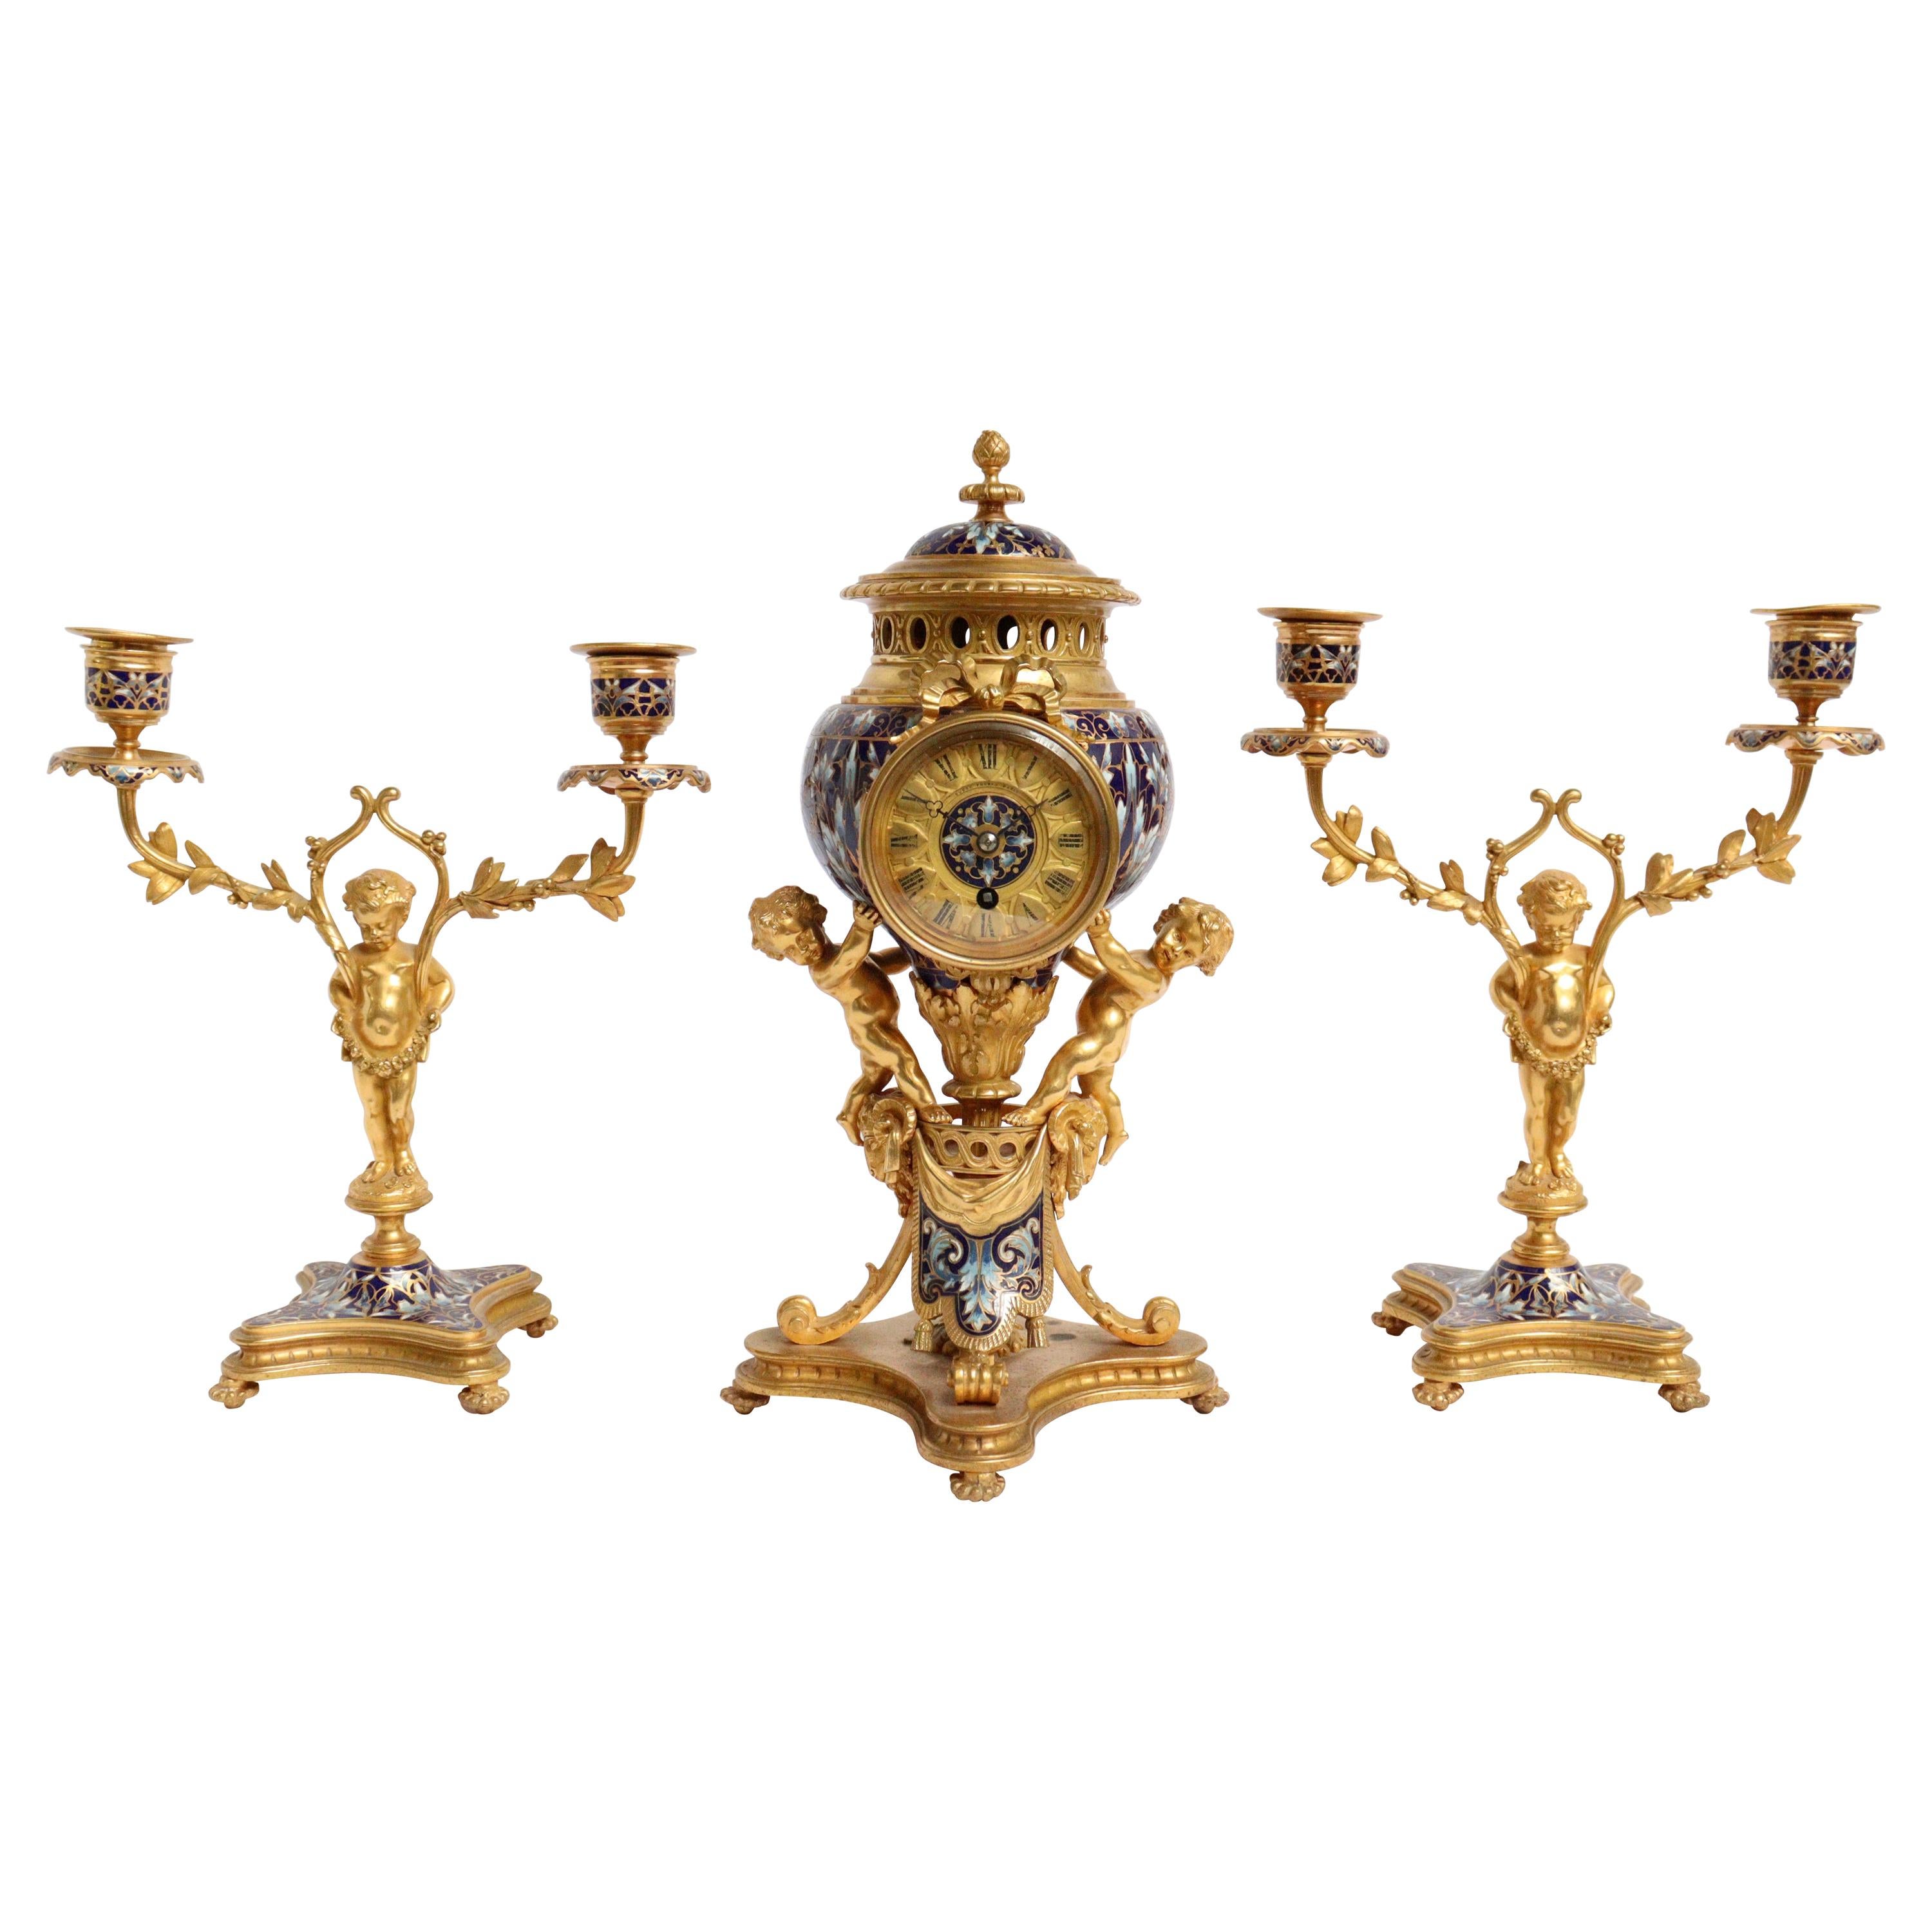 19th Century French Ormolu and Cloisonné Enamel Three-Piece Clock Garniture